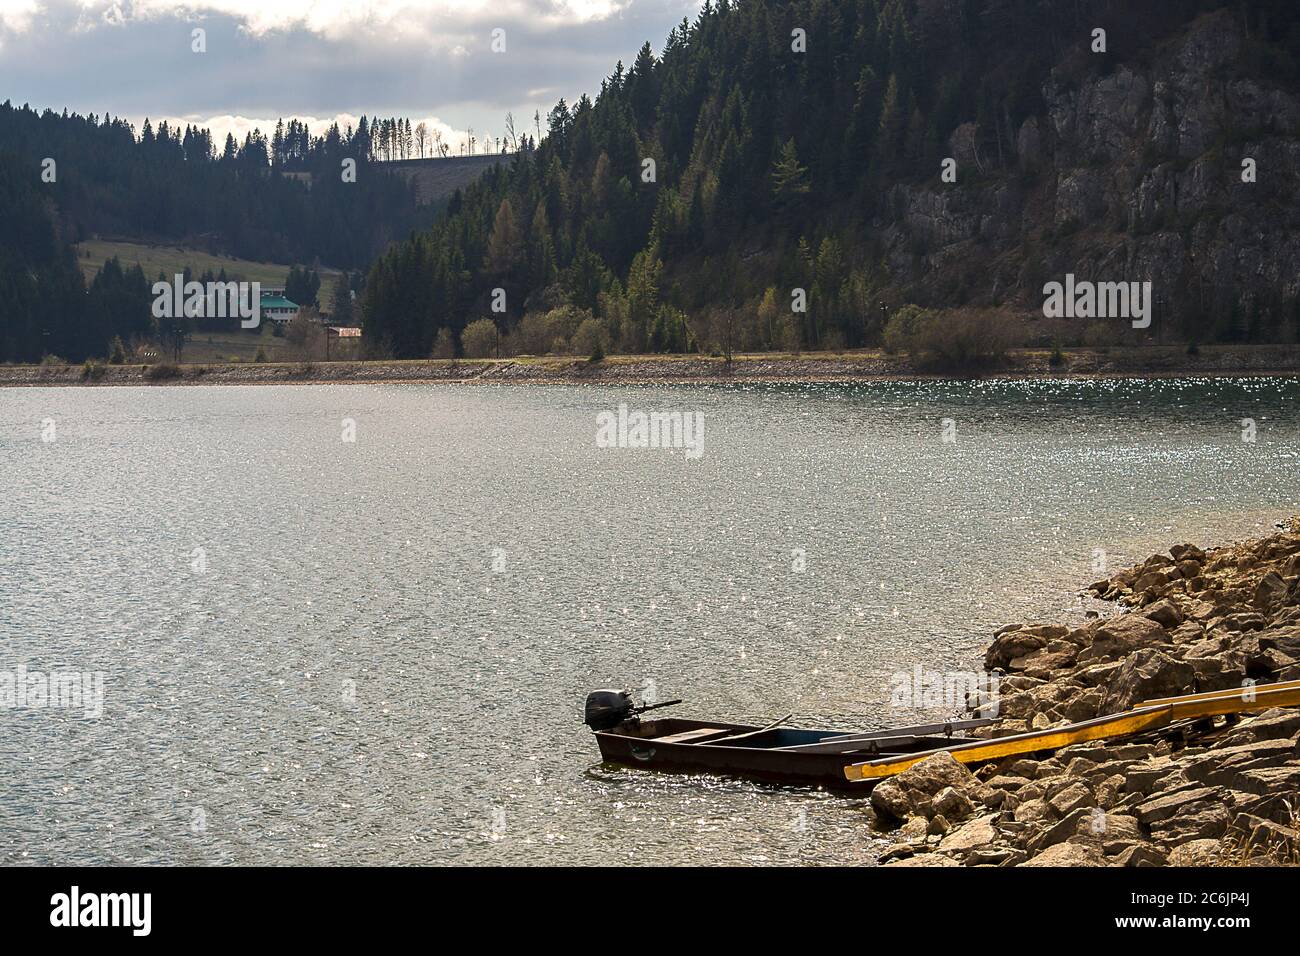 Mountain lake with a small boat in Dedinky, Slovakia. Stock Photo